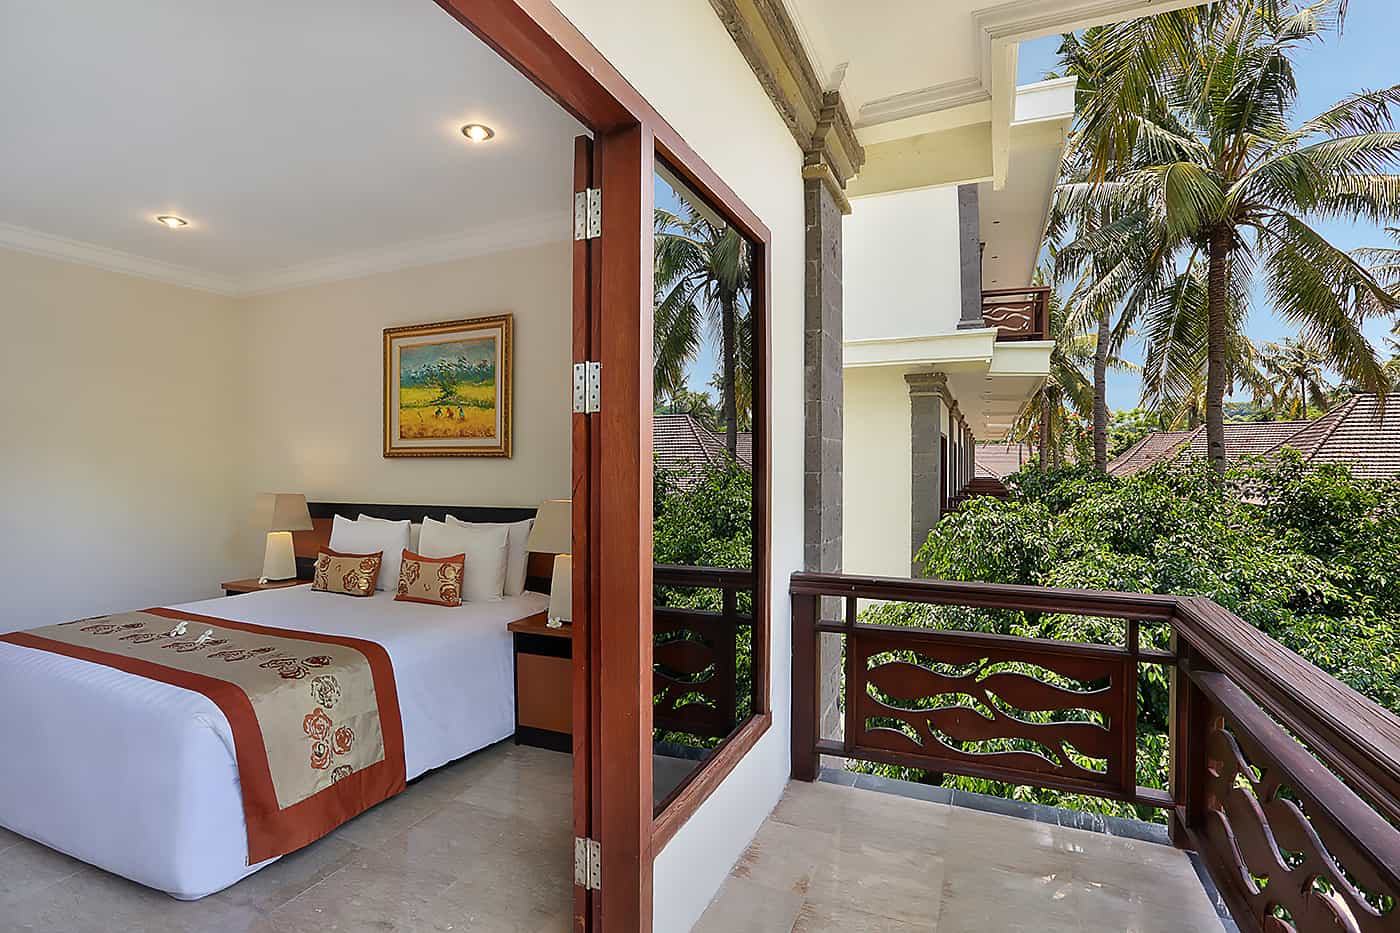 Deluxe Terrace accommodation at Hotel Ombak Sunset in Gili Trawangan Island of Lombok Indonesia